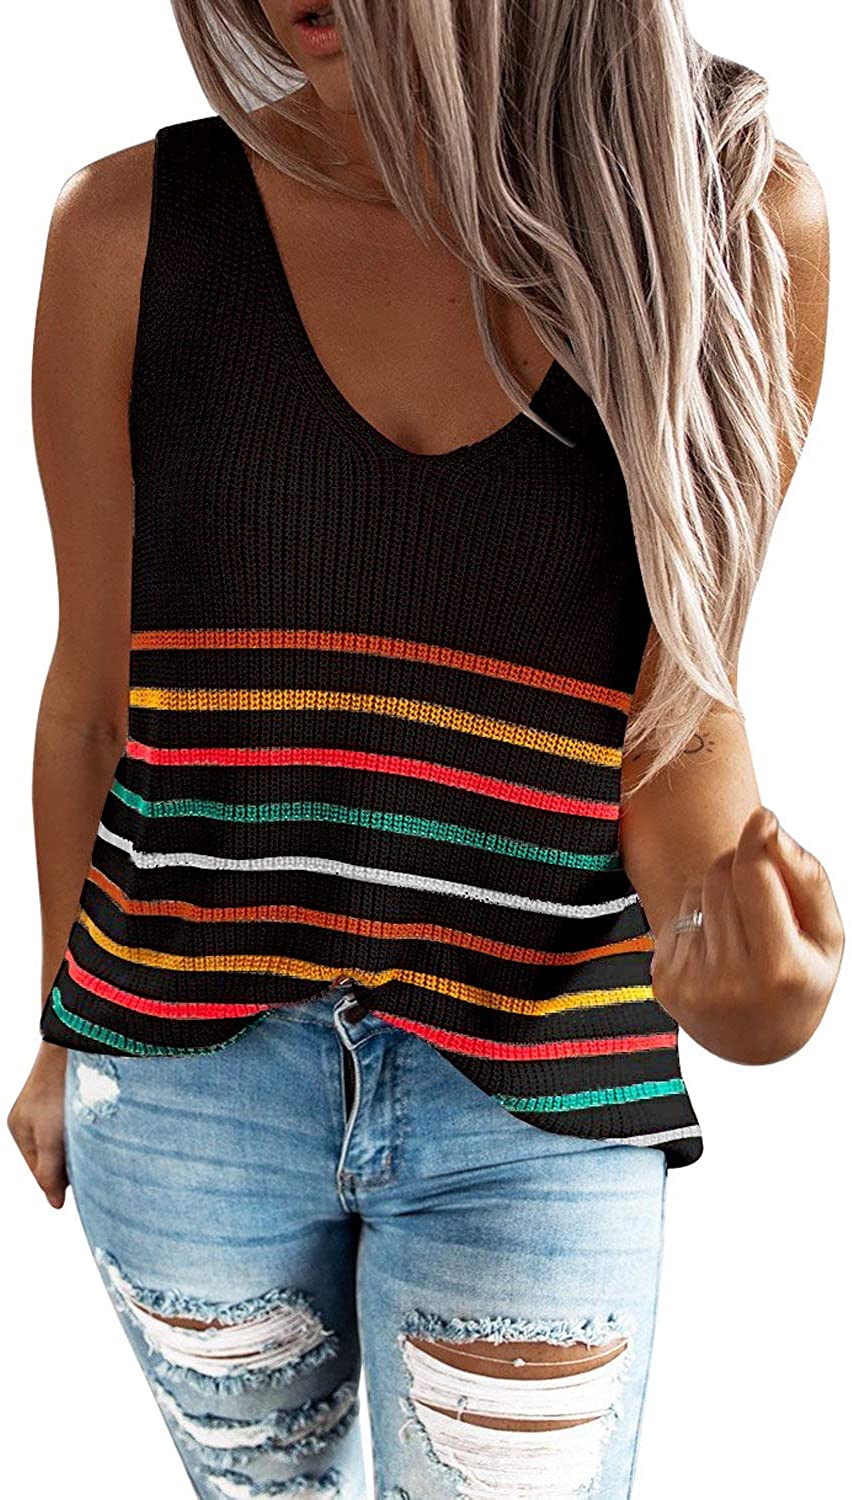 Dearlove Womens Striped Knit Tank Tops Casual Sleeveless Cami Blouse Shirts